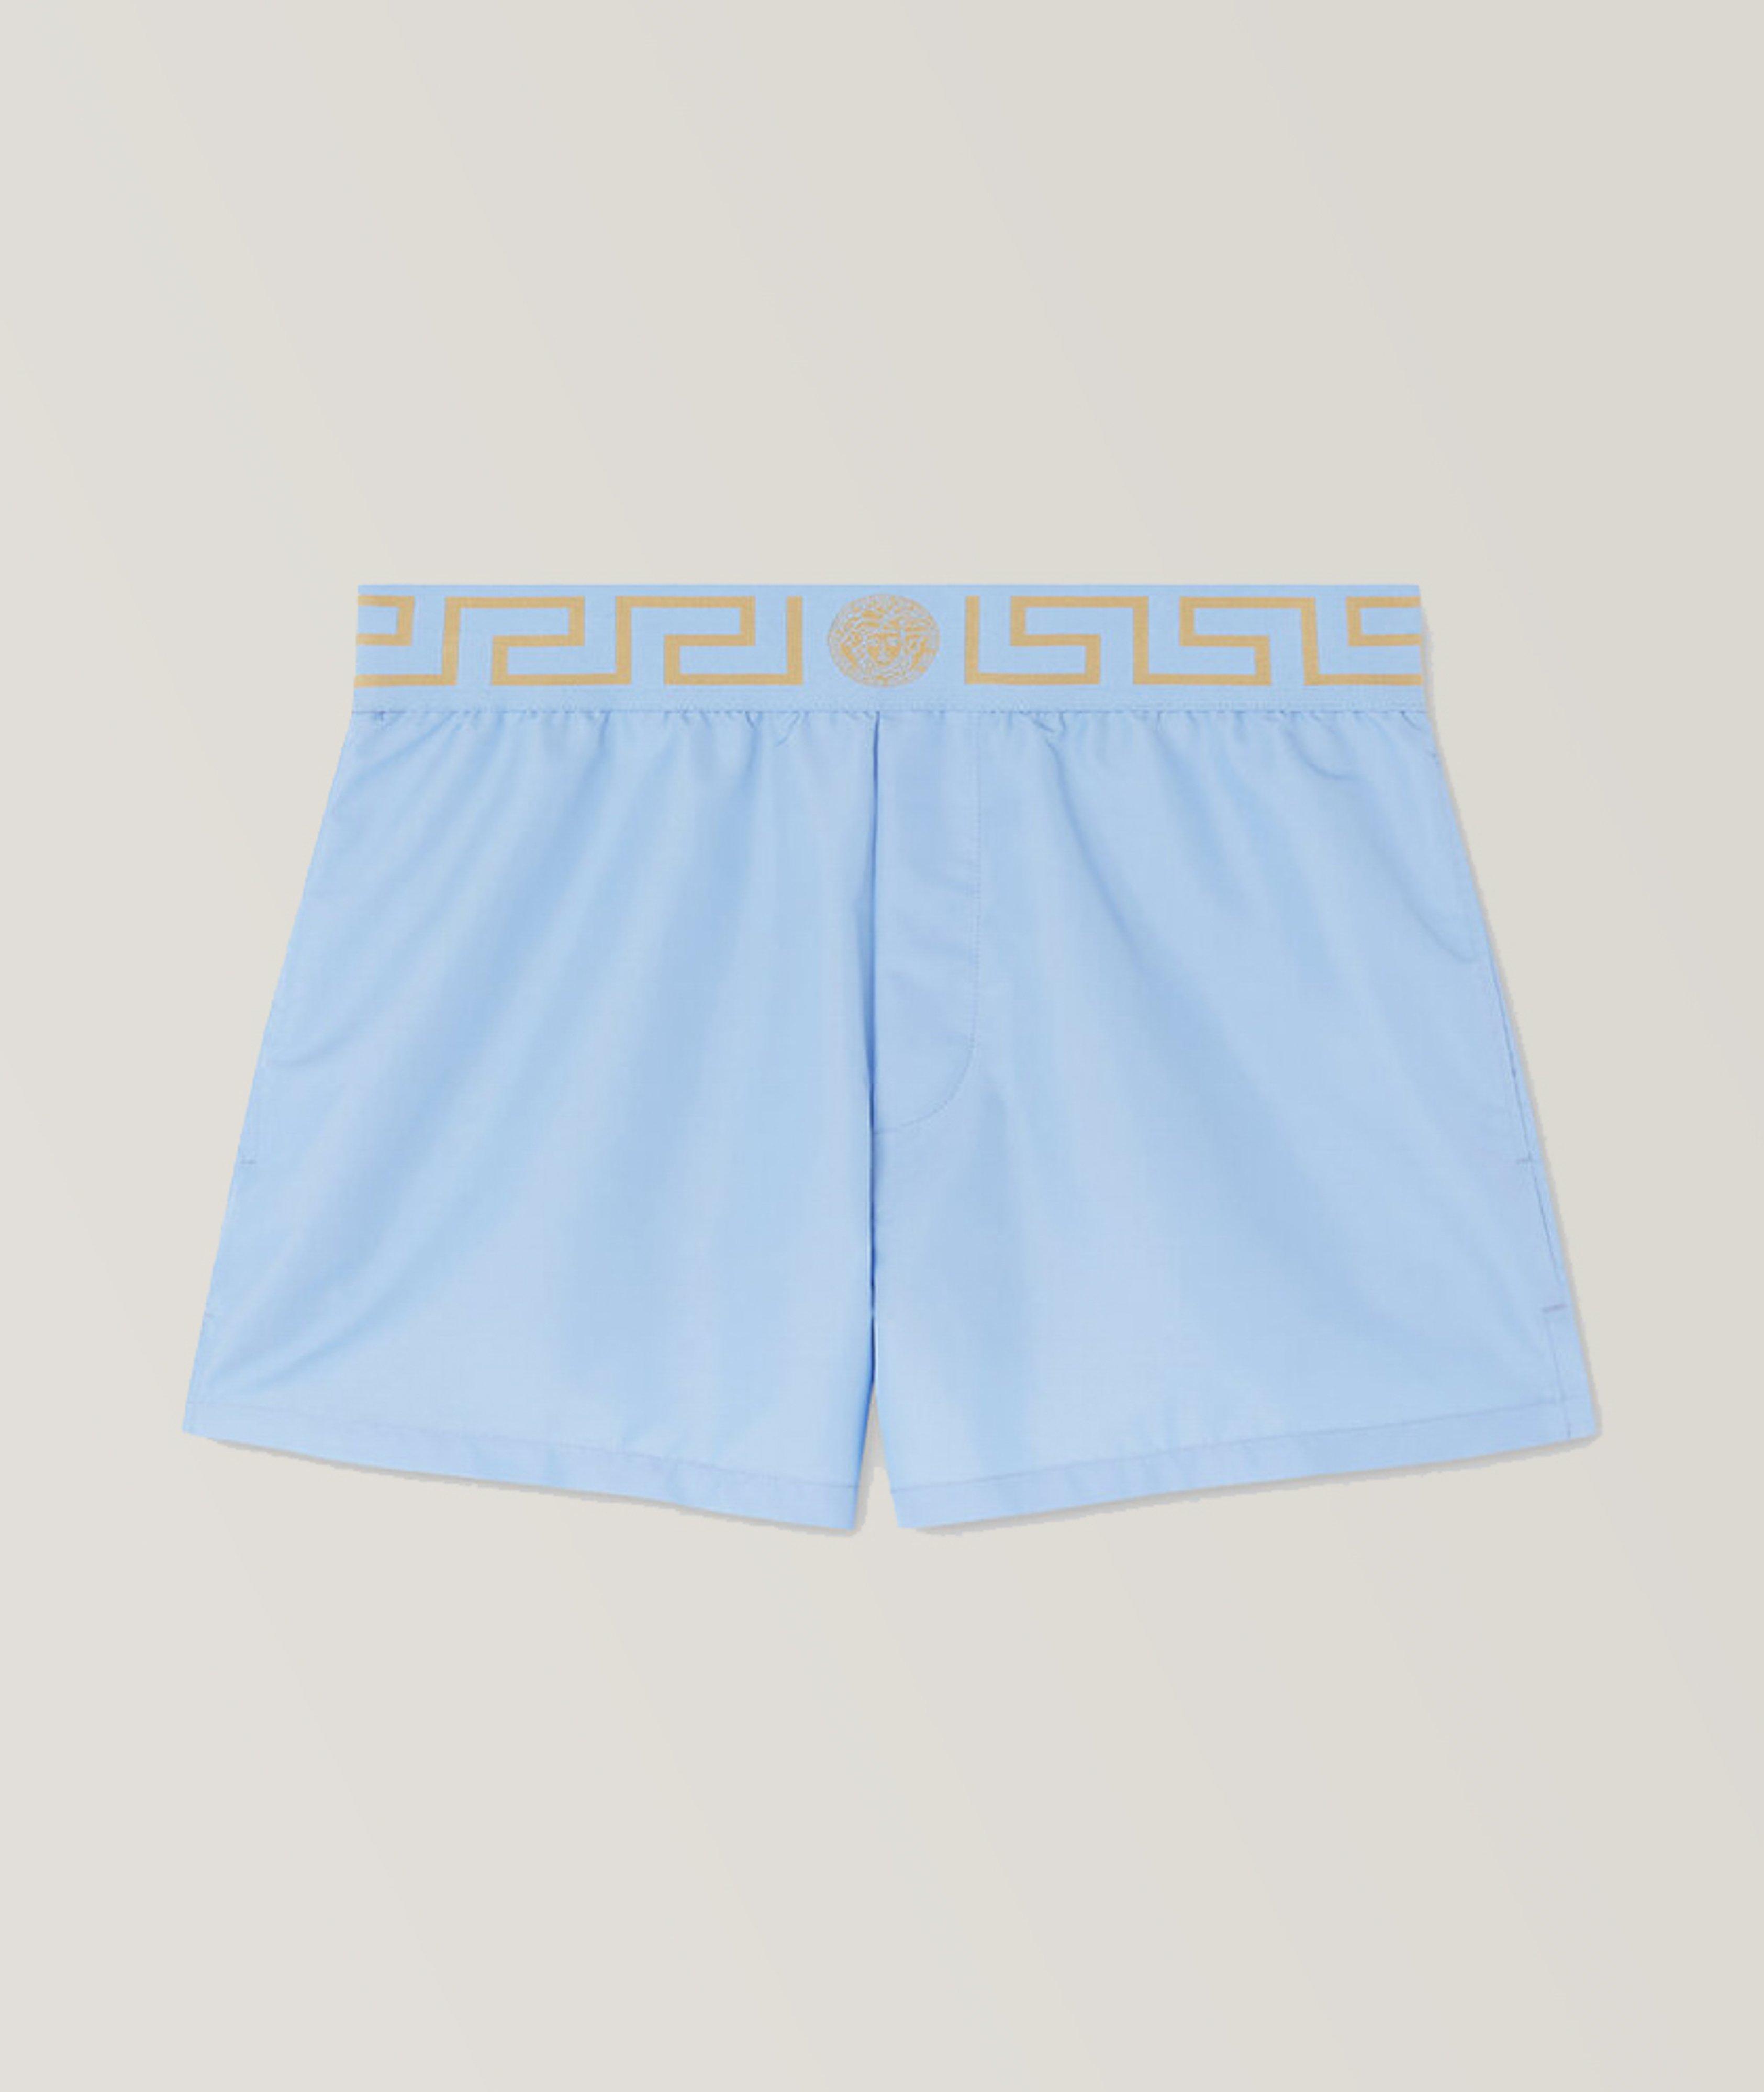 Greca border swim shorts in blue - Versace